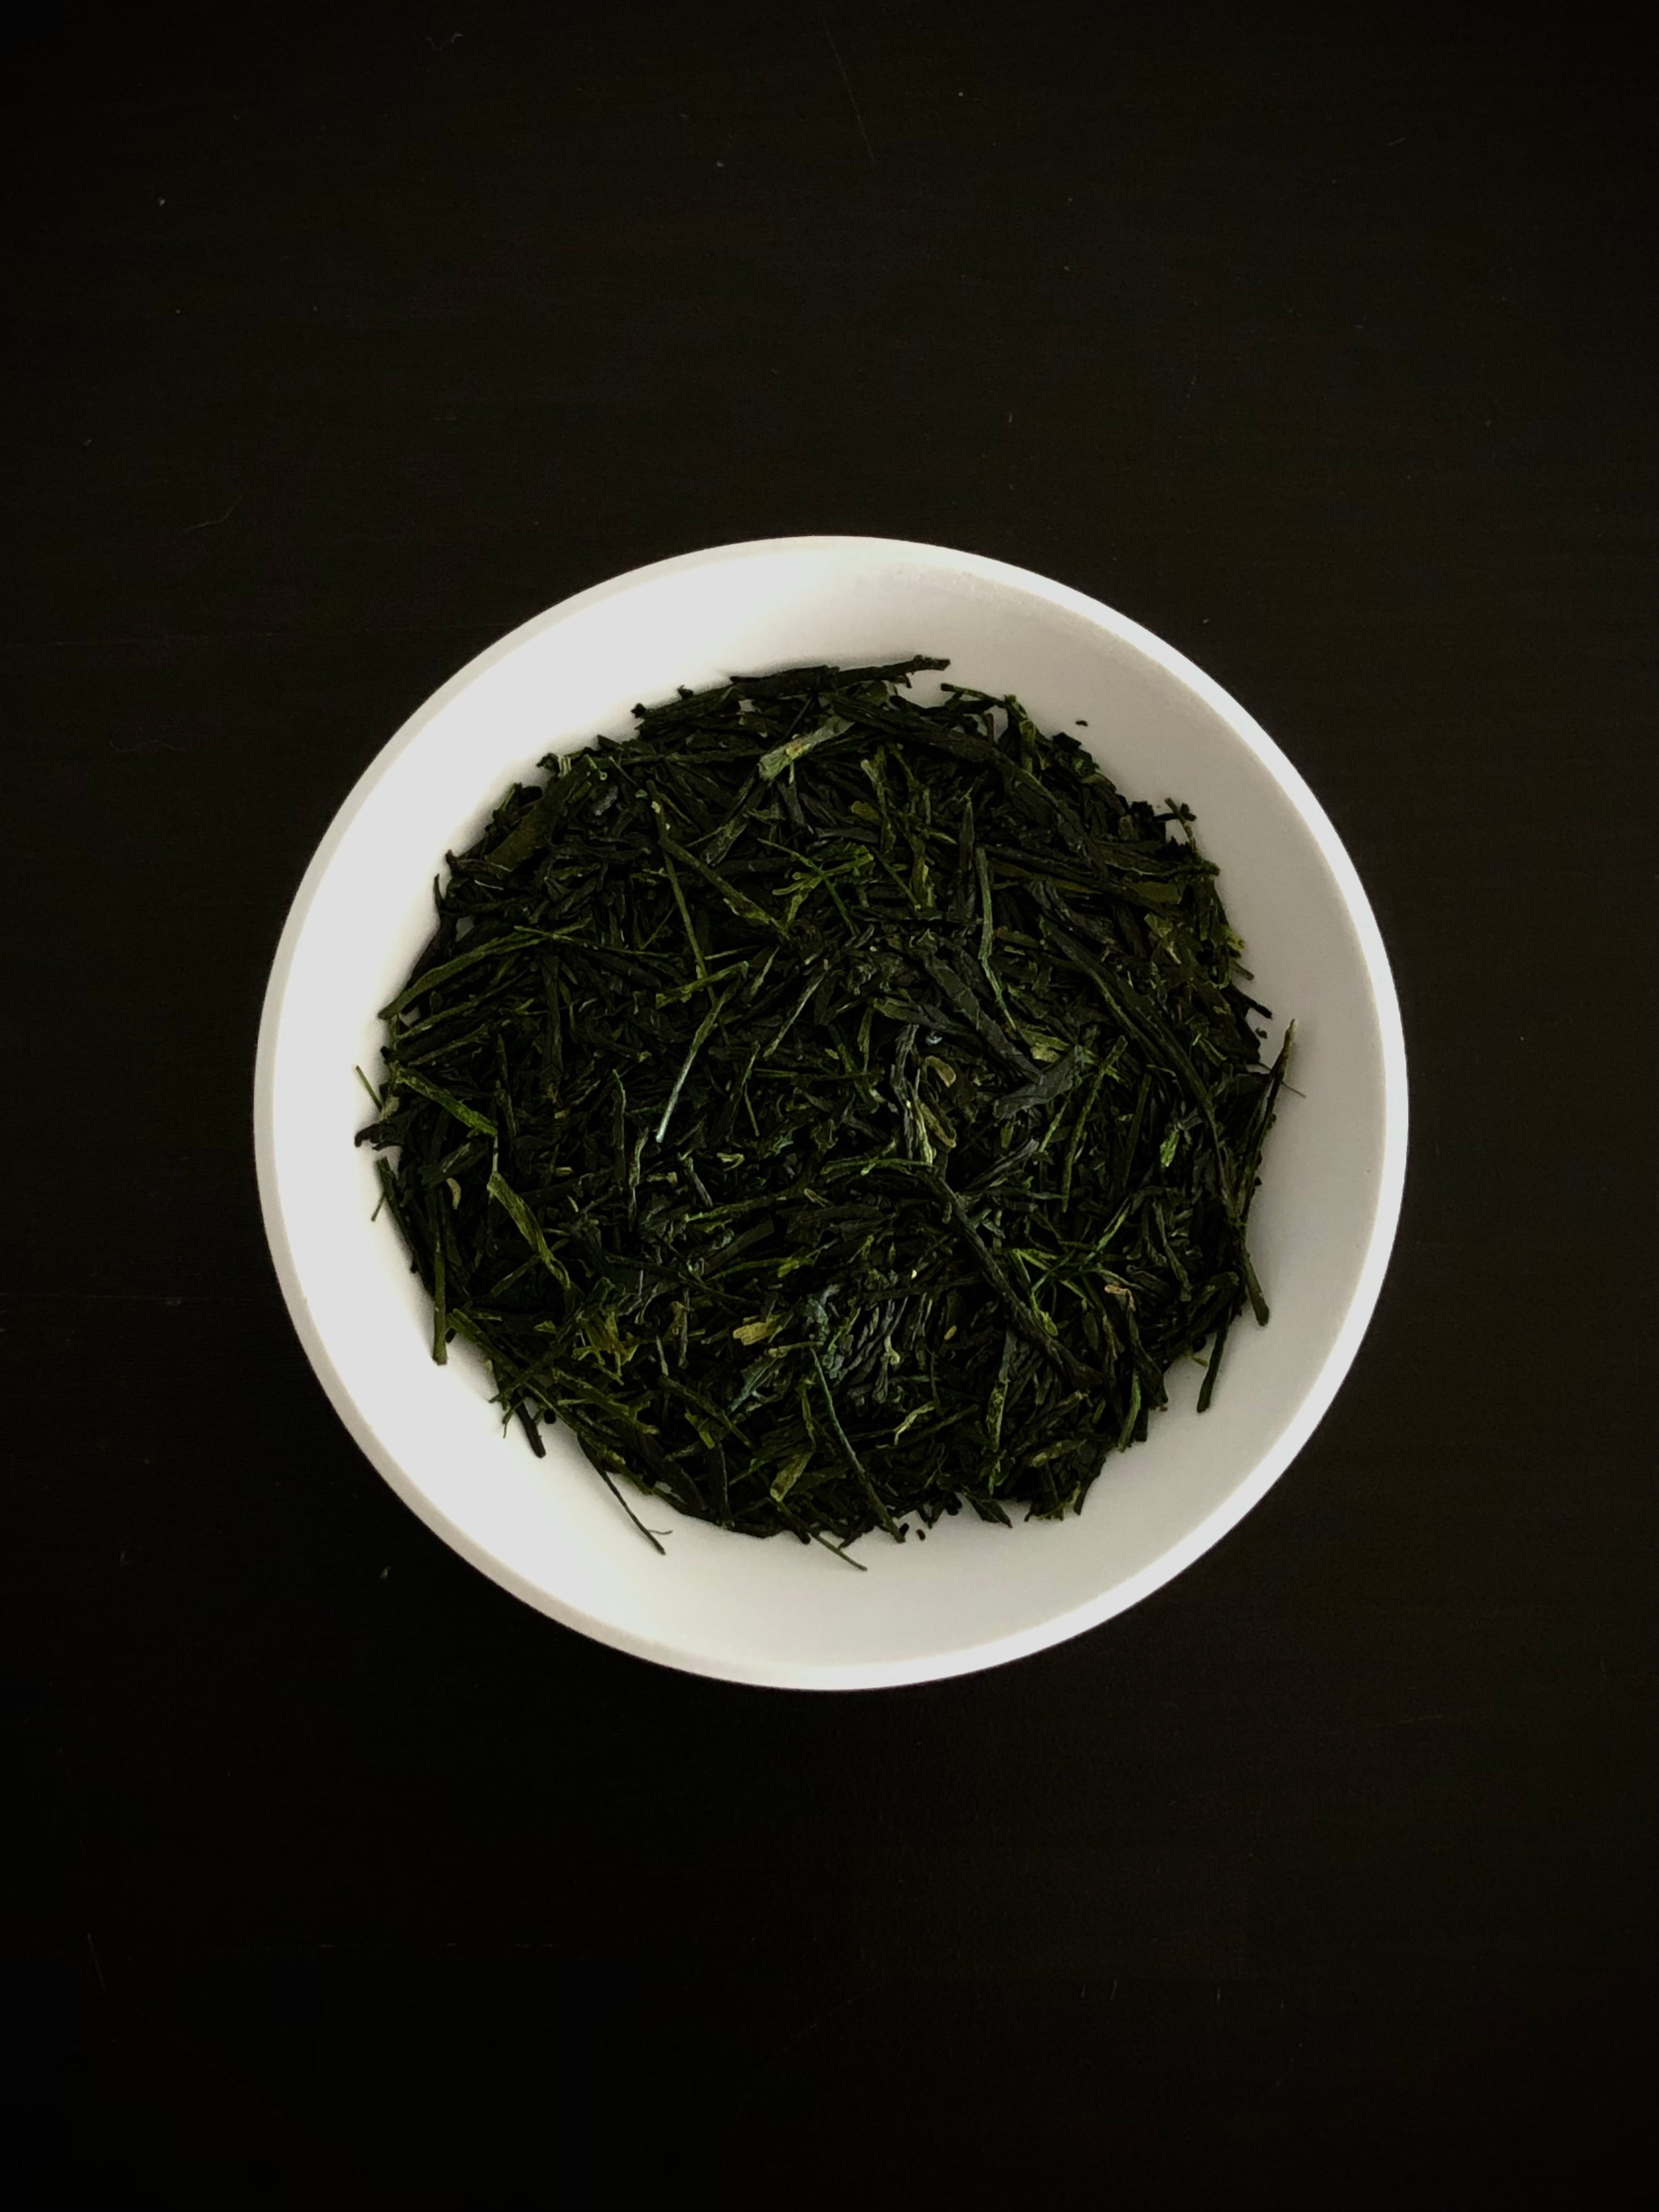 Dento hon gyokuro green tea loose leaf from Yame Fukuoka sold by Sabo Tea Australia in 20g satchel – Chiyonoen